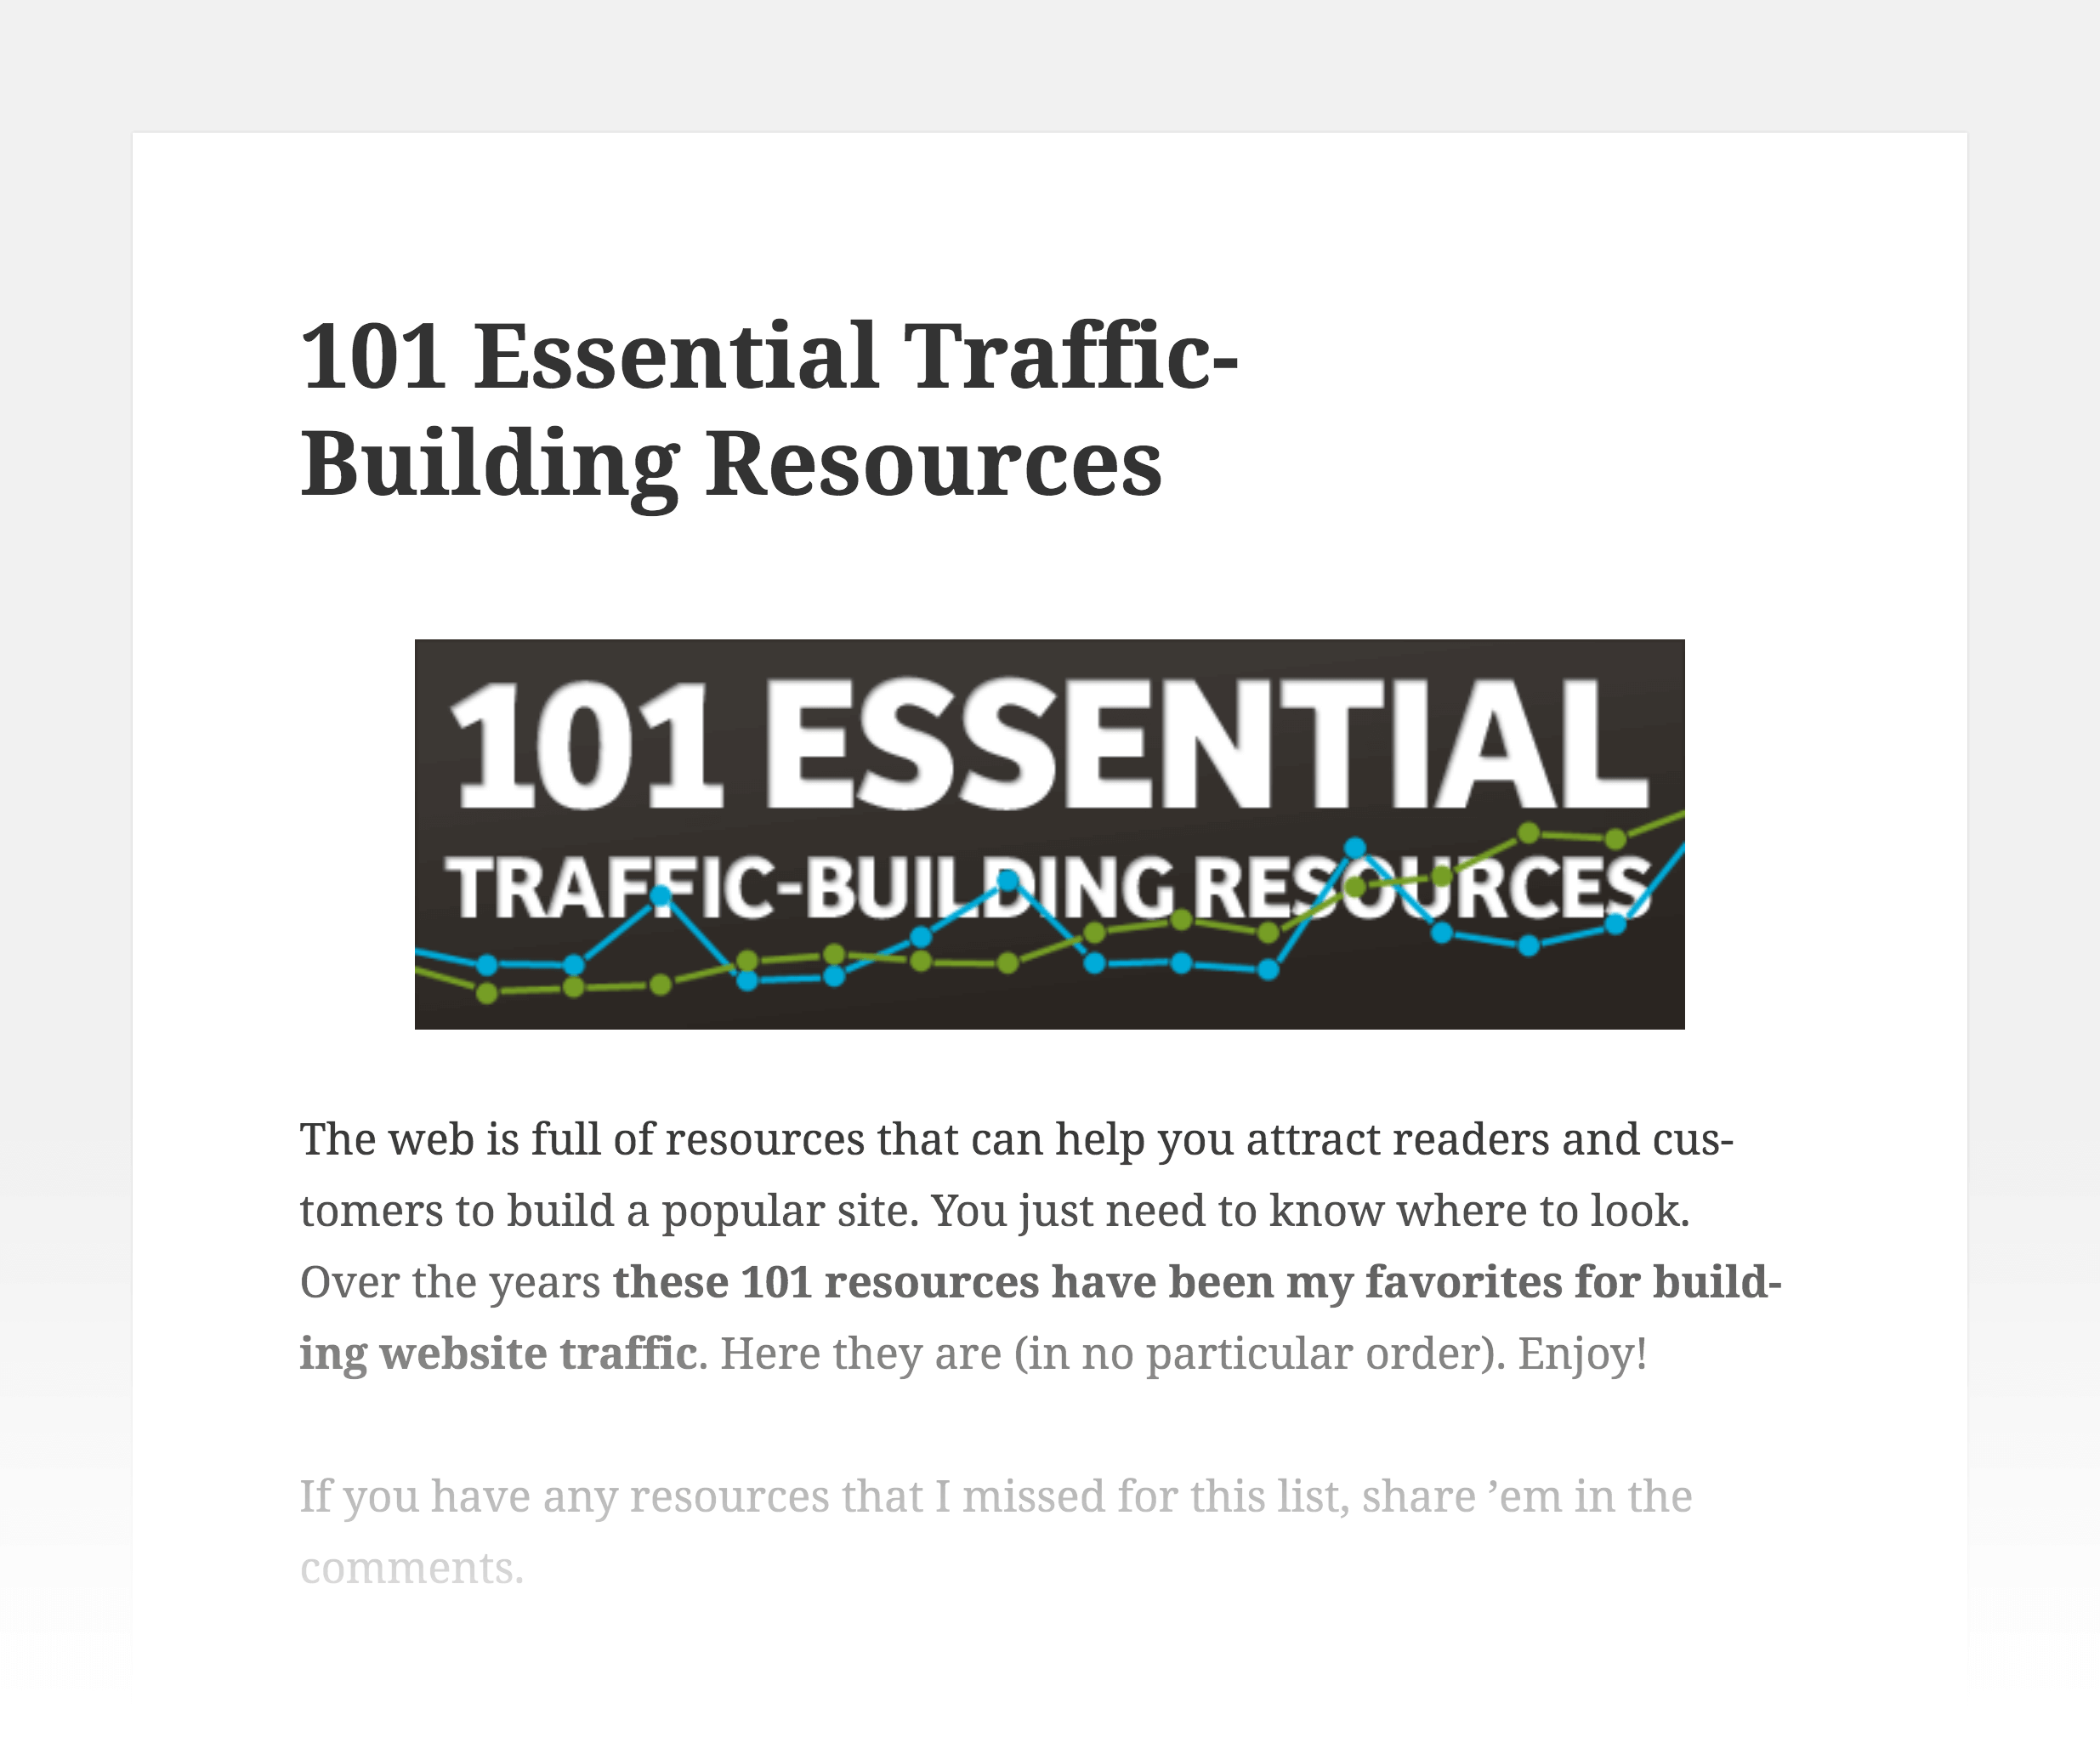 Essential traffic building resources